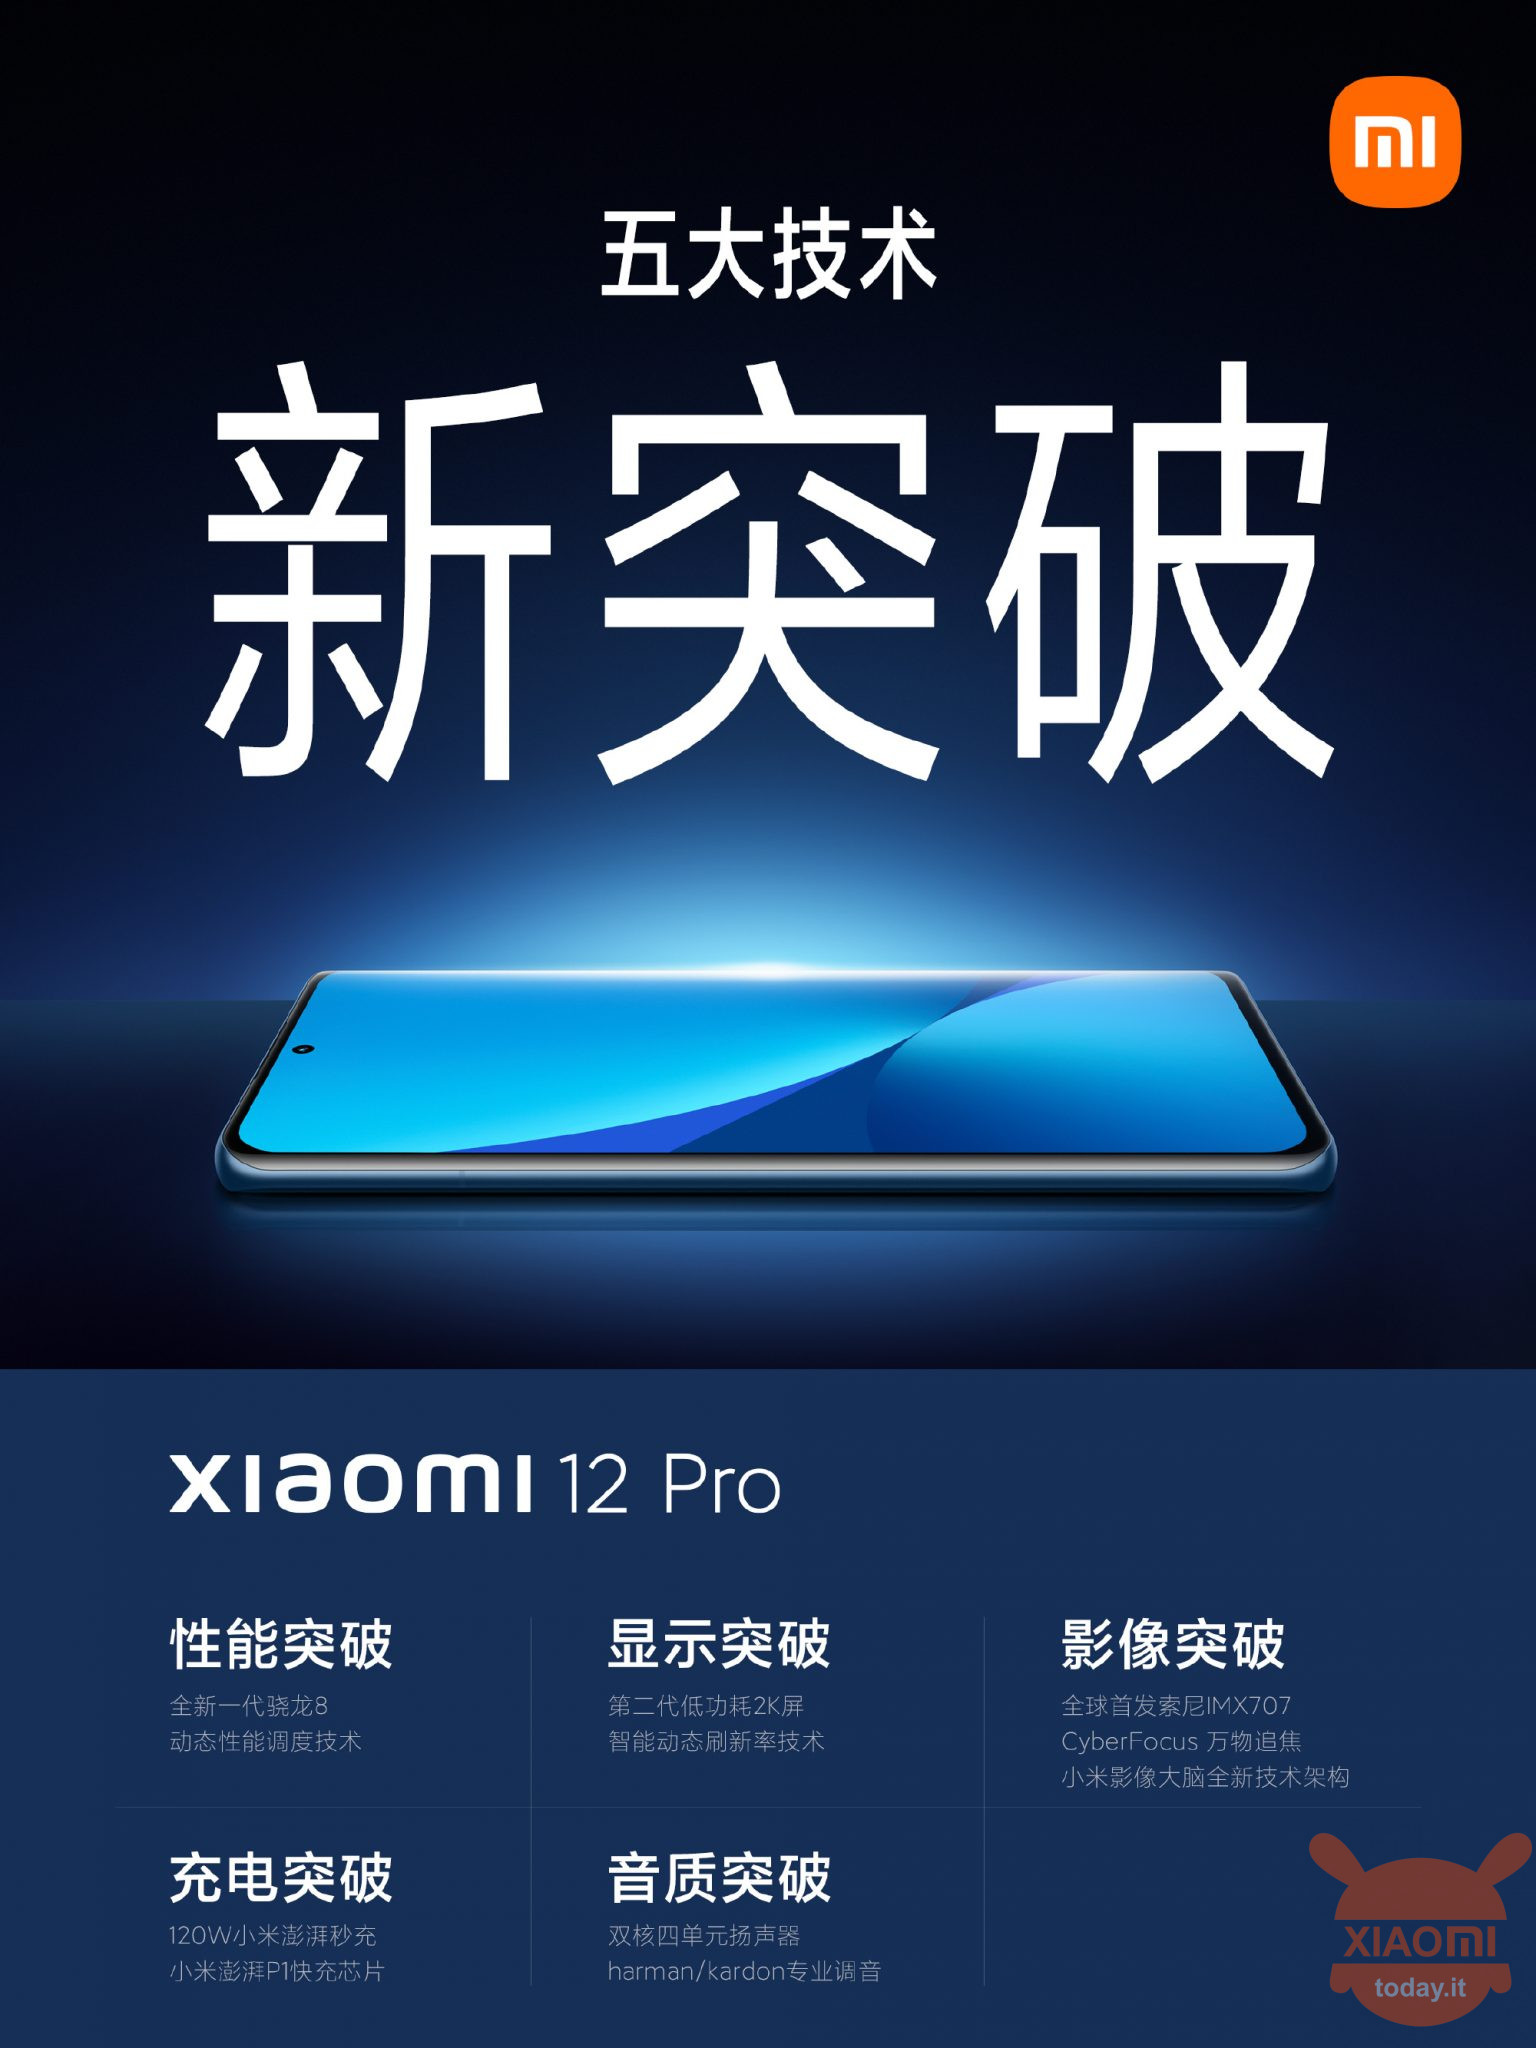 Xiaomi 12 Pro 